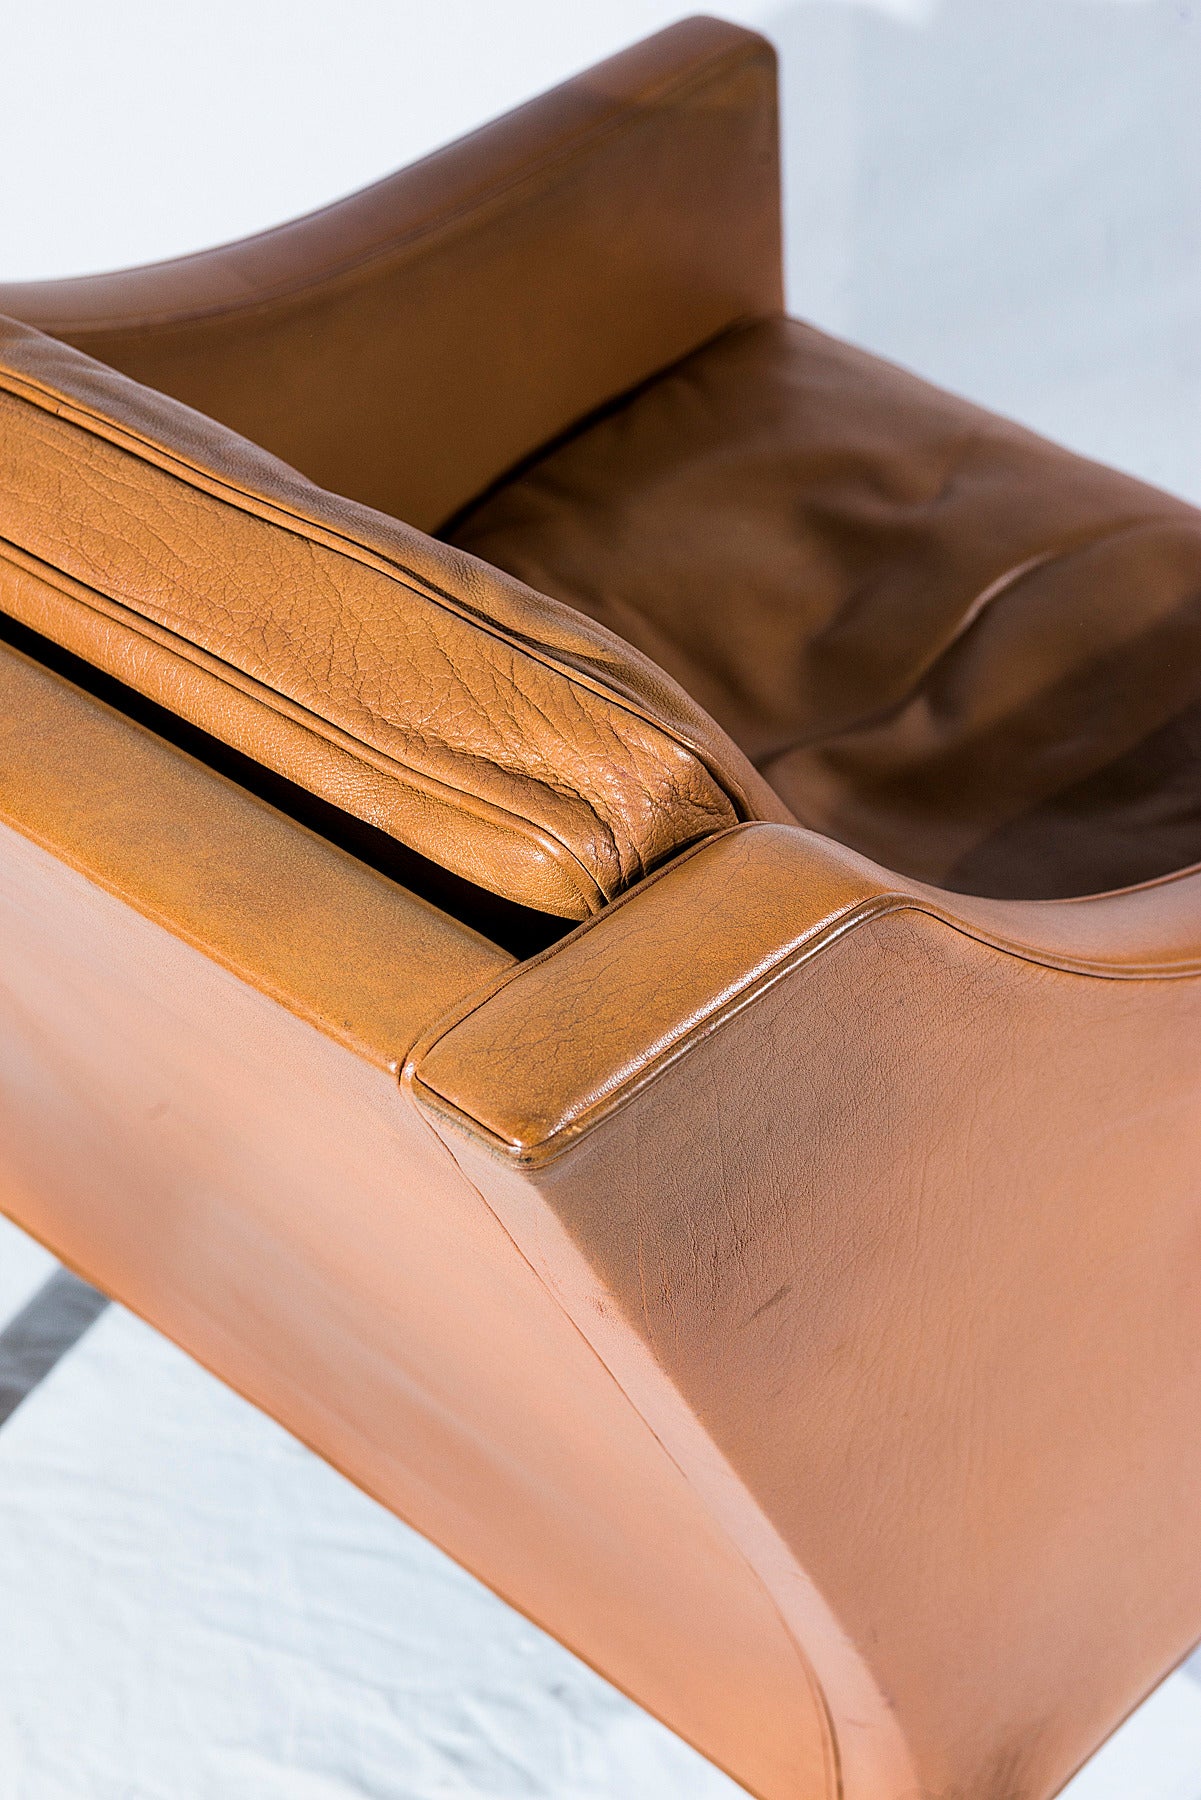 Børge Mogensen Model No. 2207 Leather Lounge Chair 1